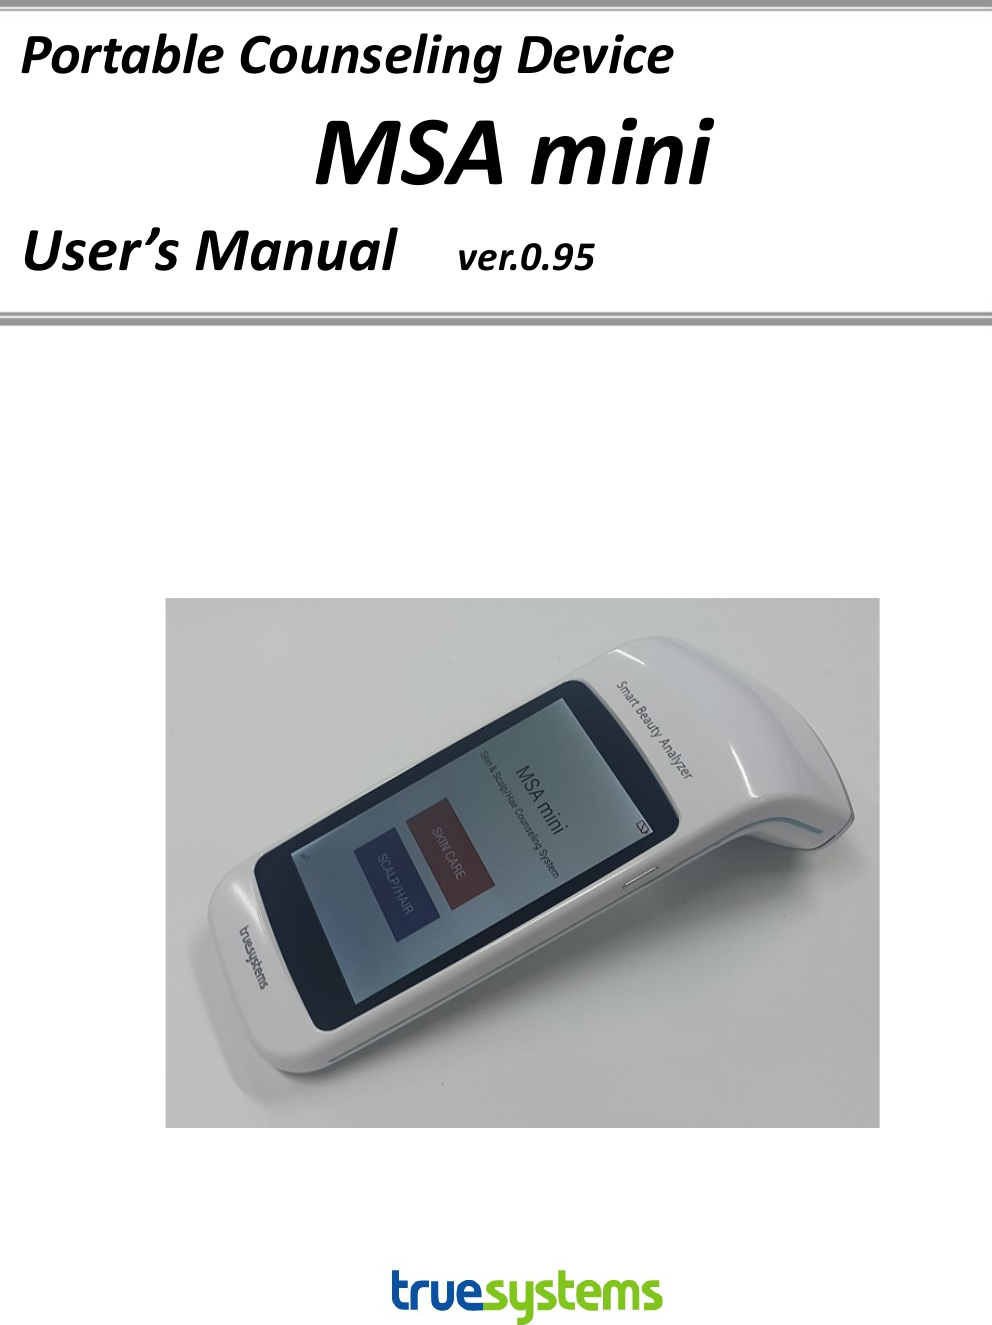                     Portable Counseling Device MSA mini   User’s Manual   ver.0.95  